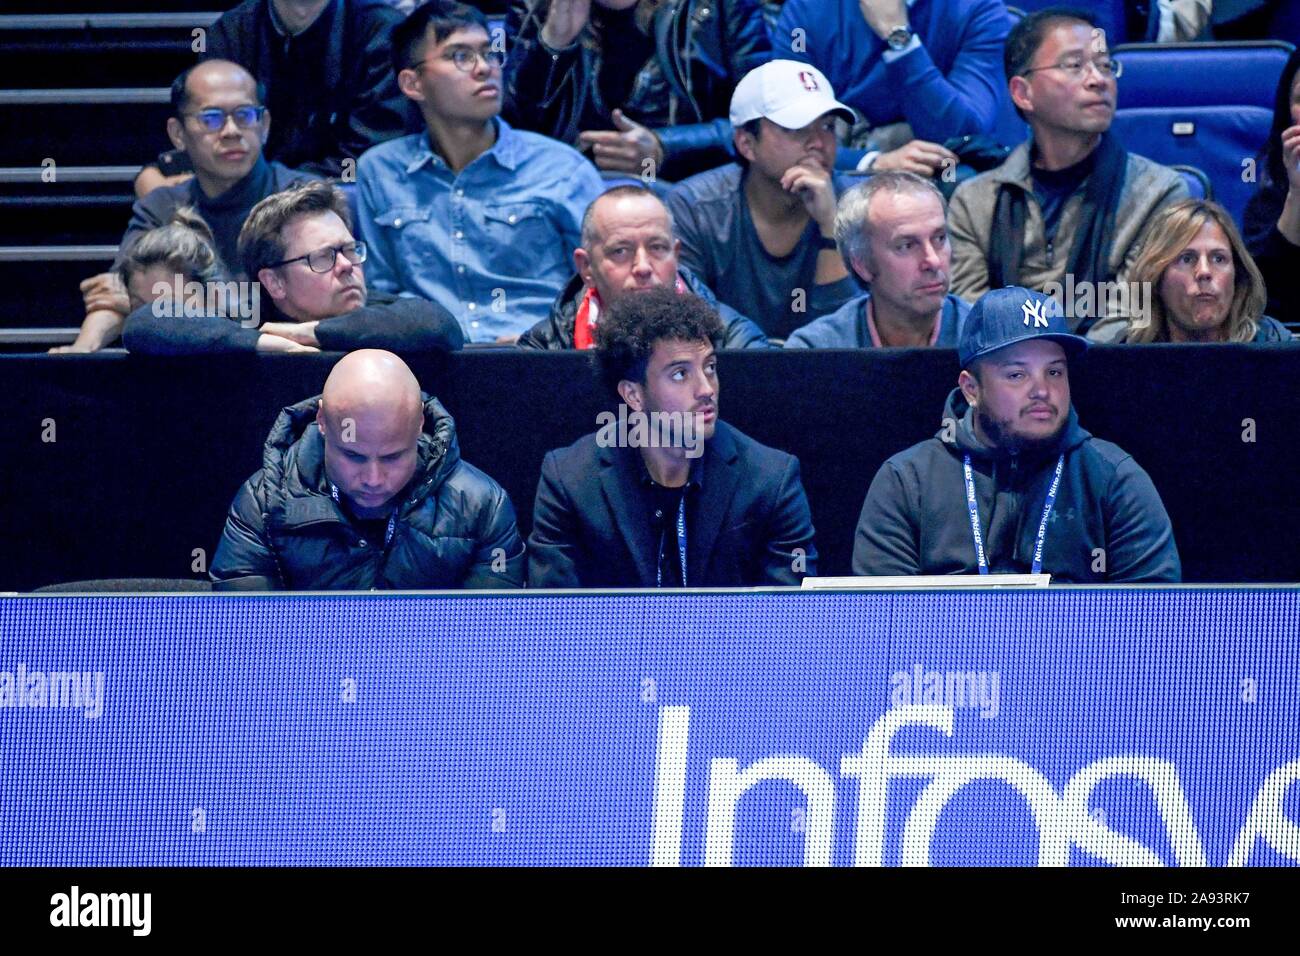 Londra, UK, 12 Nov 2019, Dominic thiem ,aut, durante Nitto ATP Finals - Novak Đokovic Vs Dominic Thiem - Tennis intenzionali - Credito: LPS/Roberto Zanettin/Alamy Live News Foto Stock